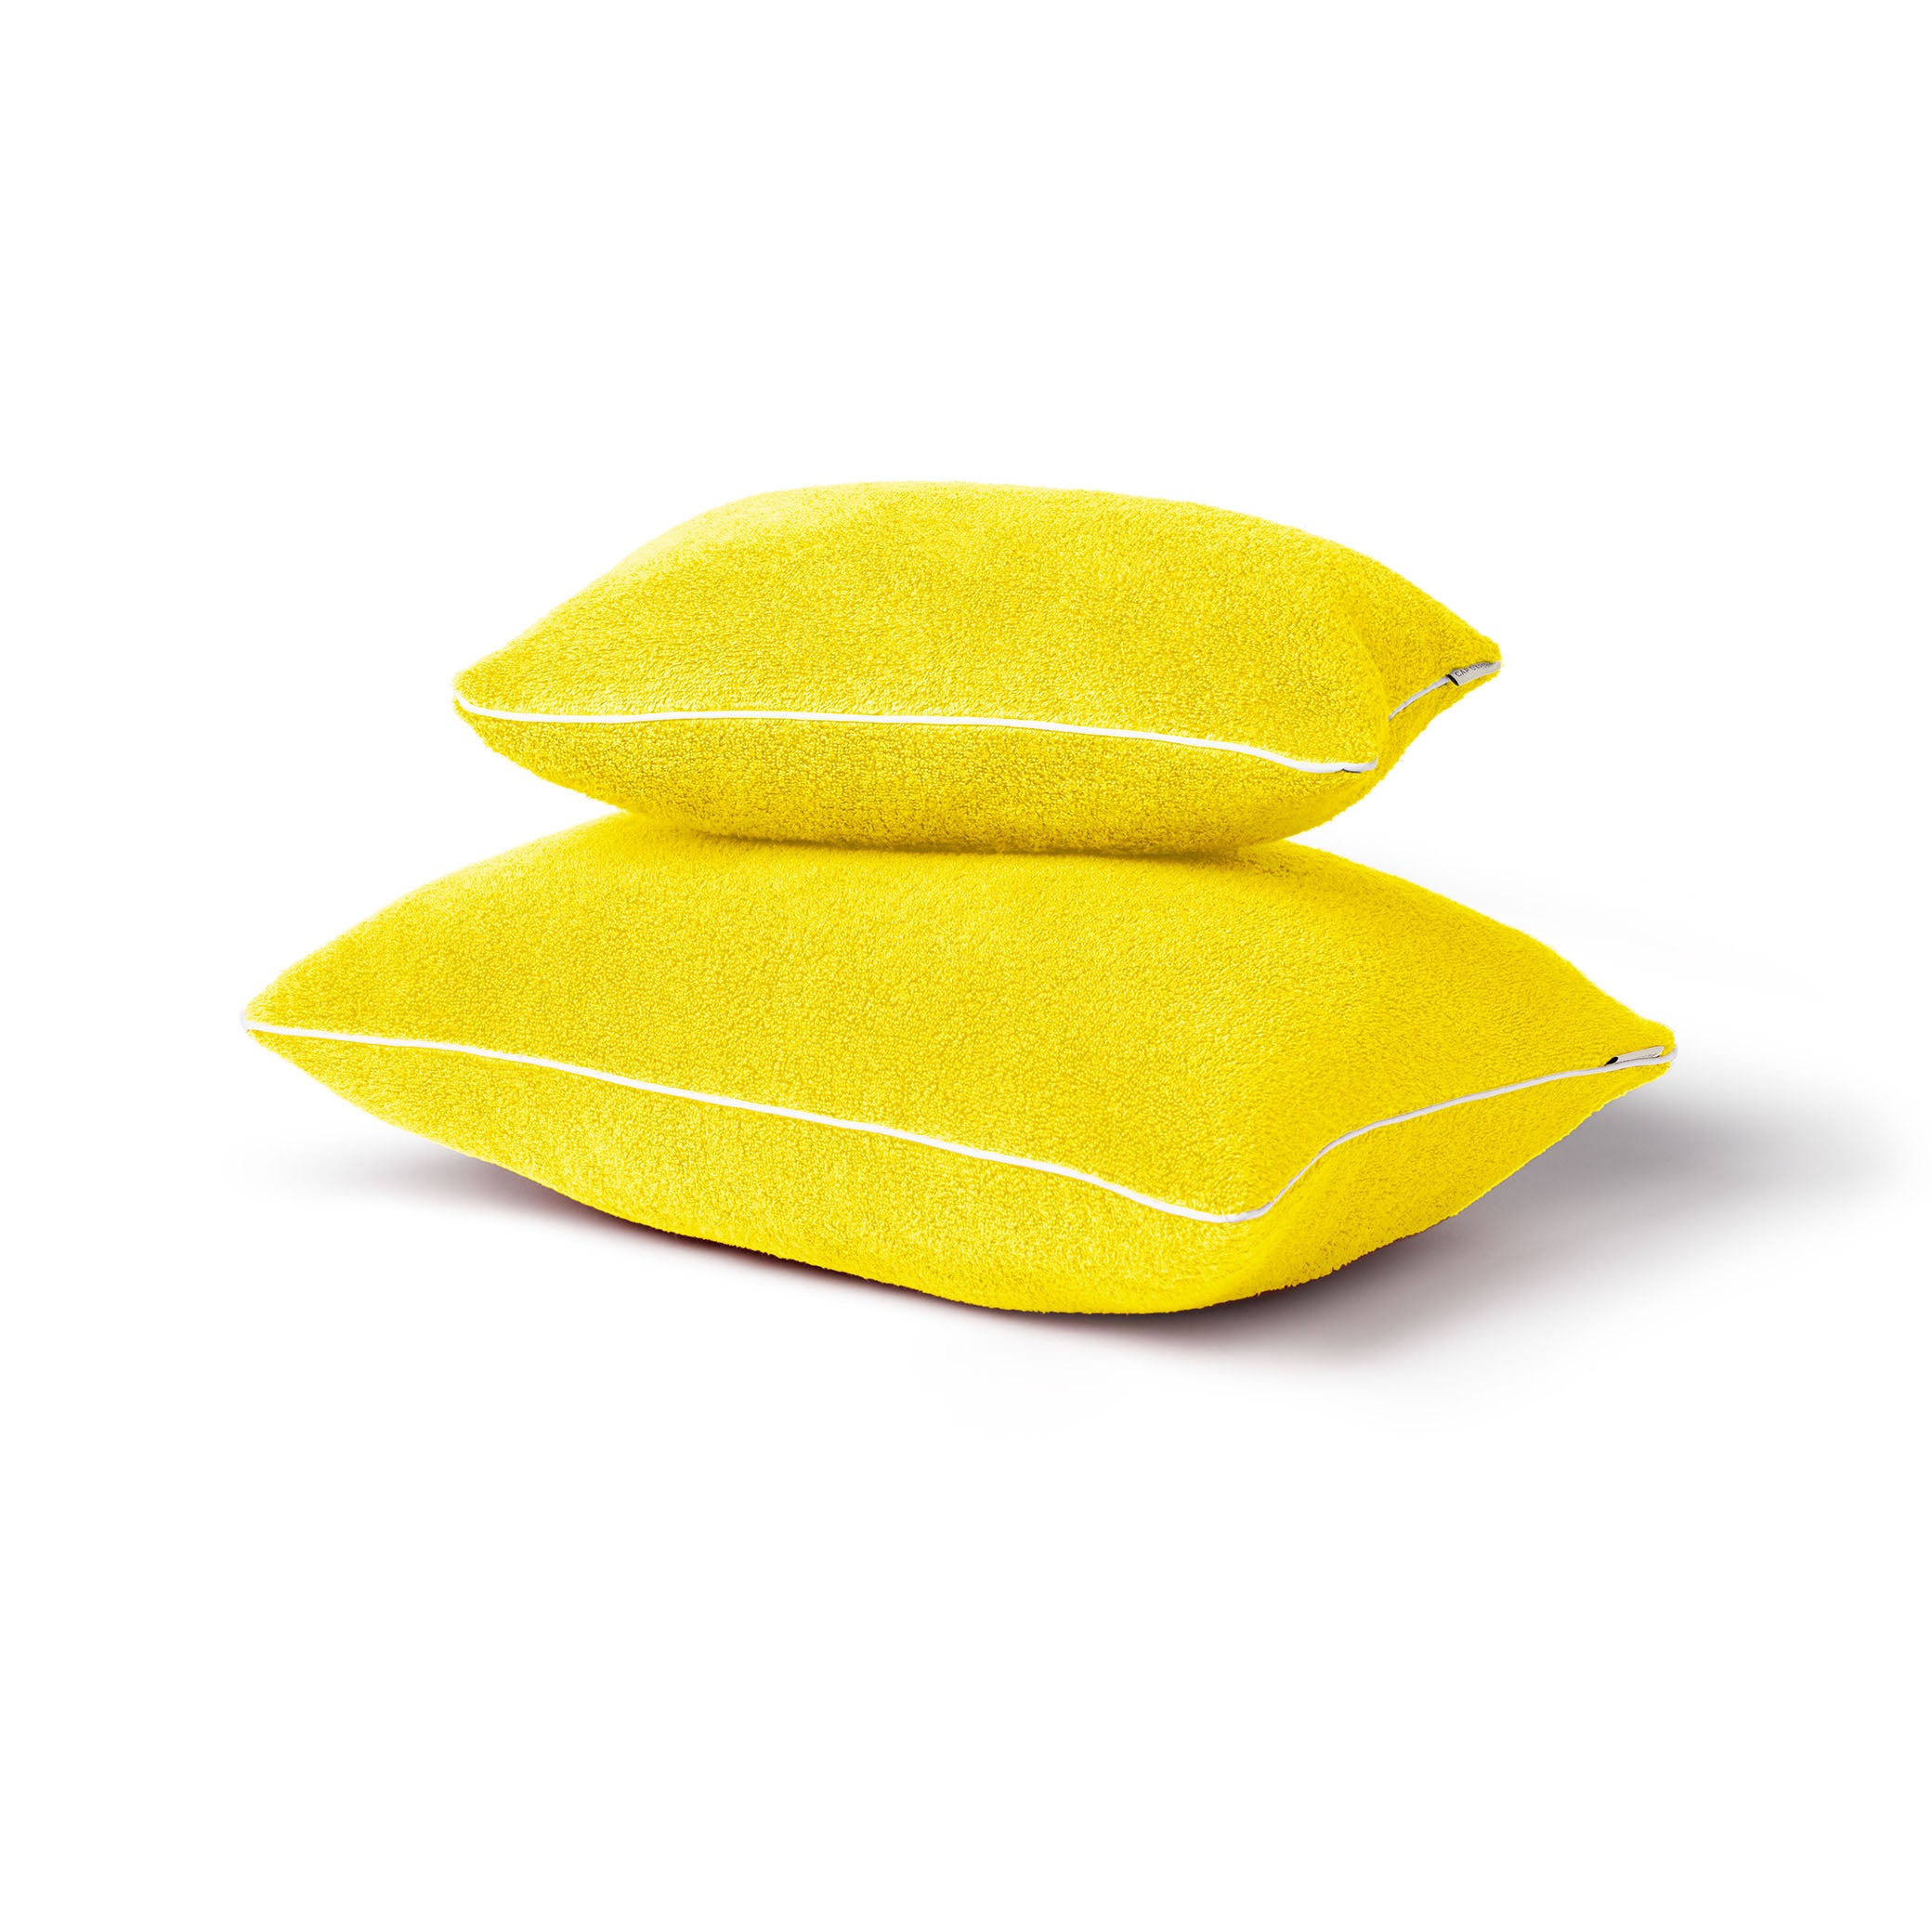 coussin de plage eponge jaune zenith cap d arsene made in france